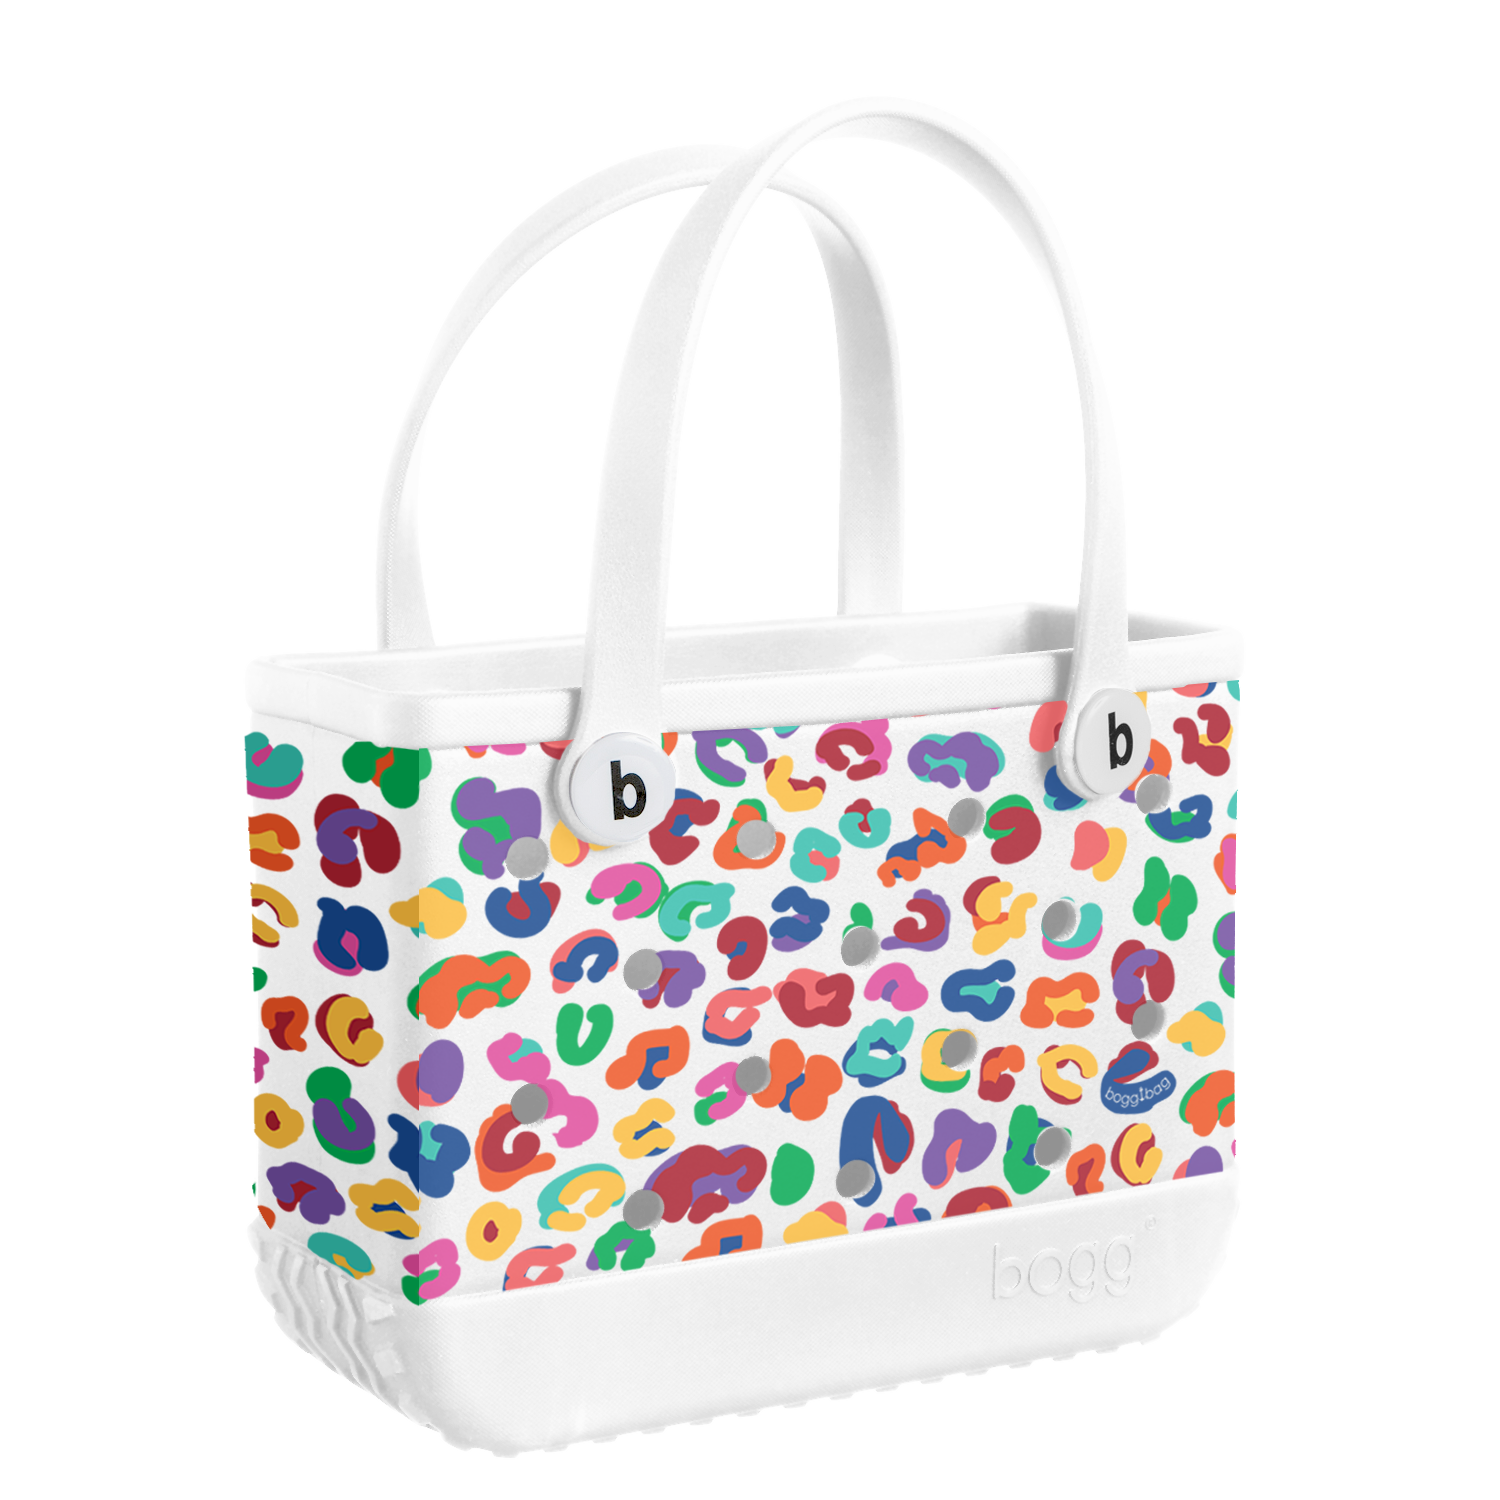 Bogg Bag BB Decorative Insert Bags (Set of 2)